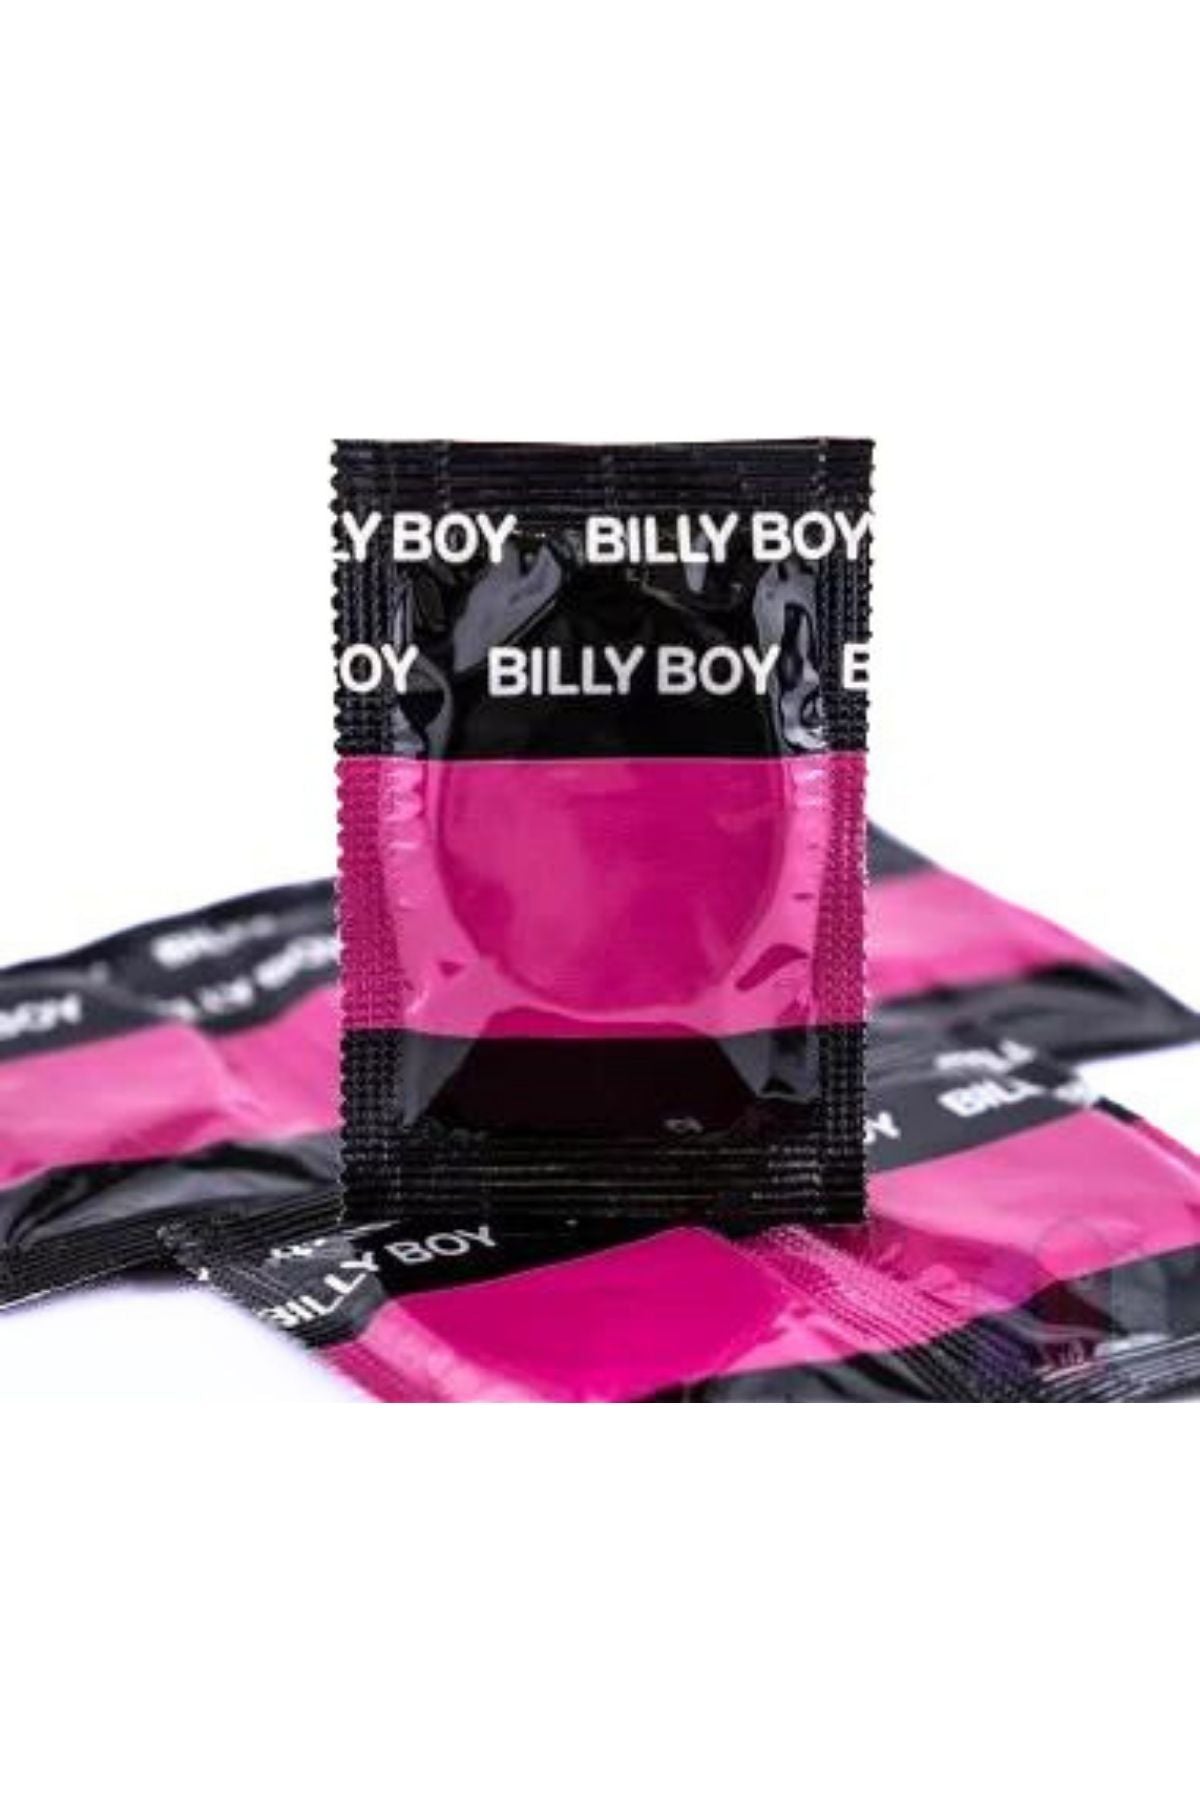 Billy Boy Endurance Condoms 3 Pack